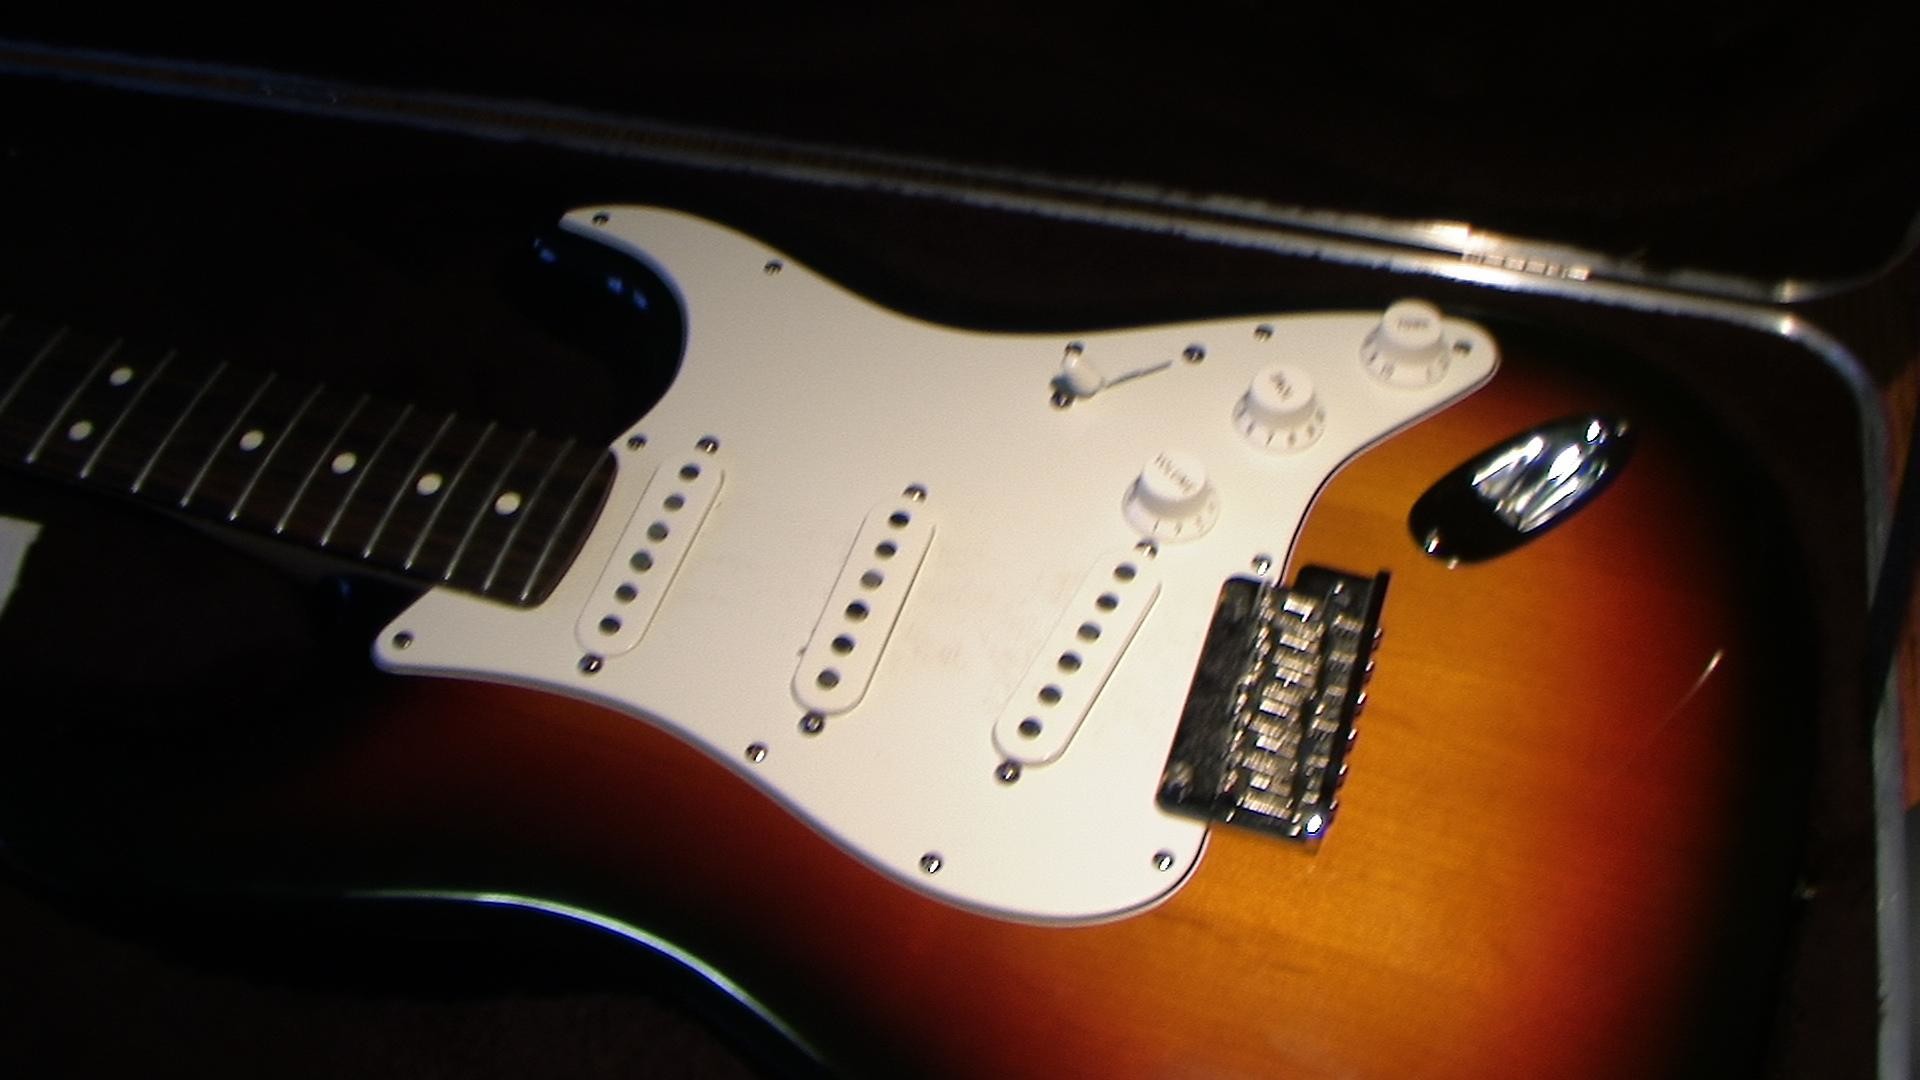 59 Fender Stratocaster Wallpaper Hd